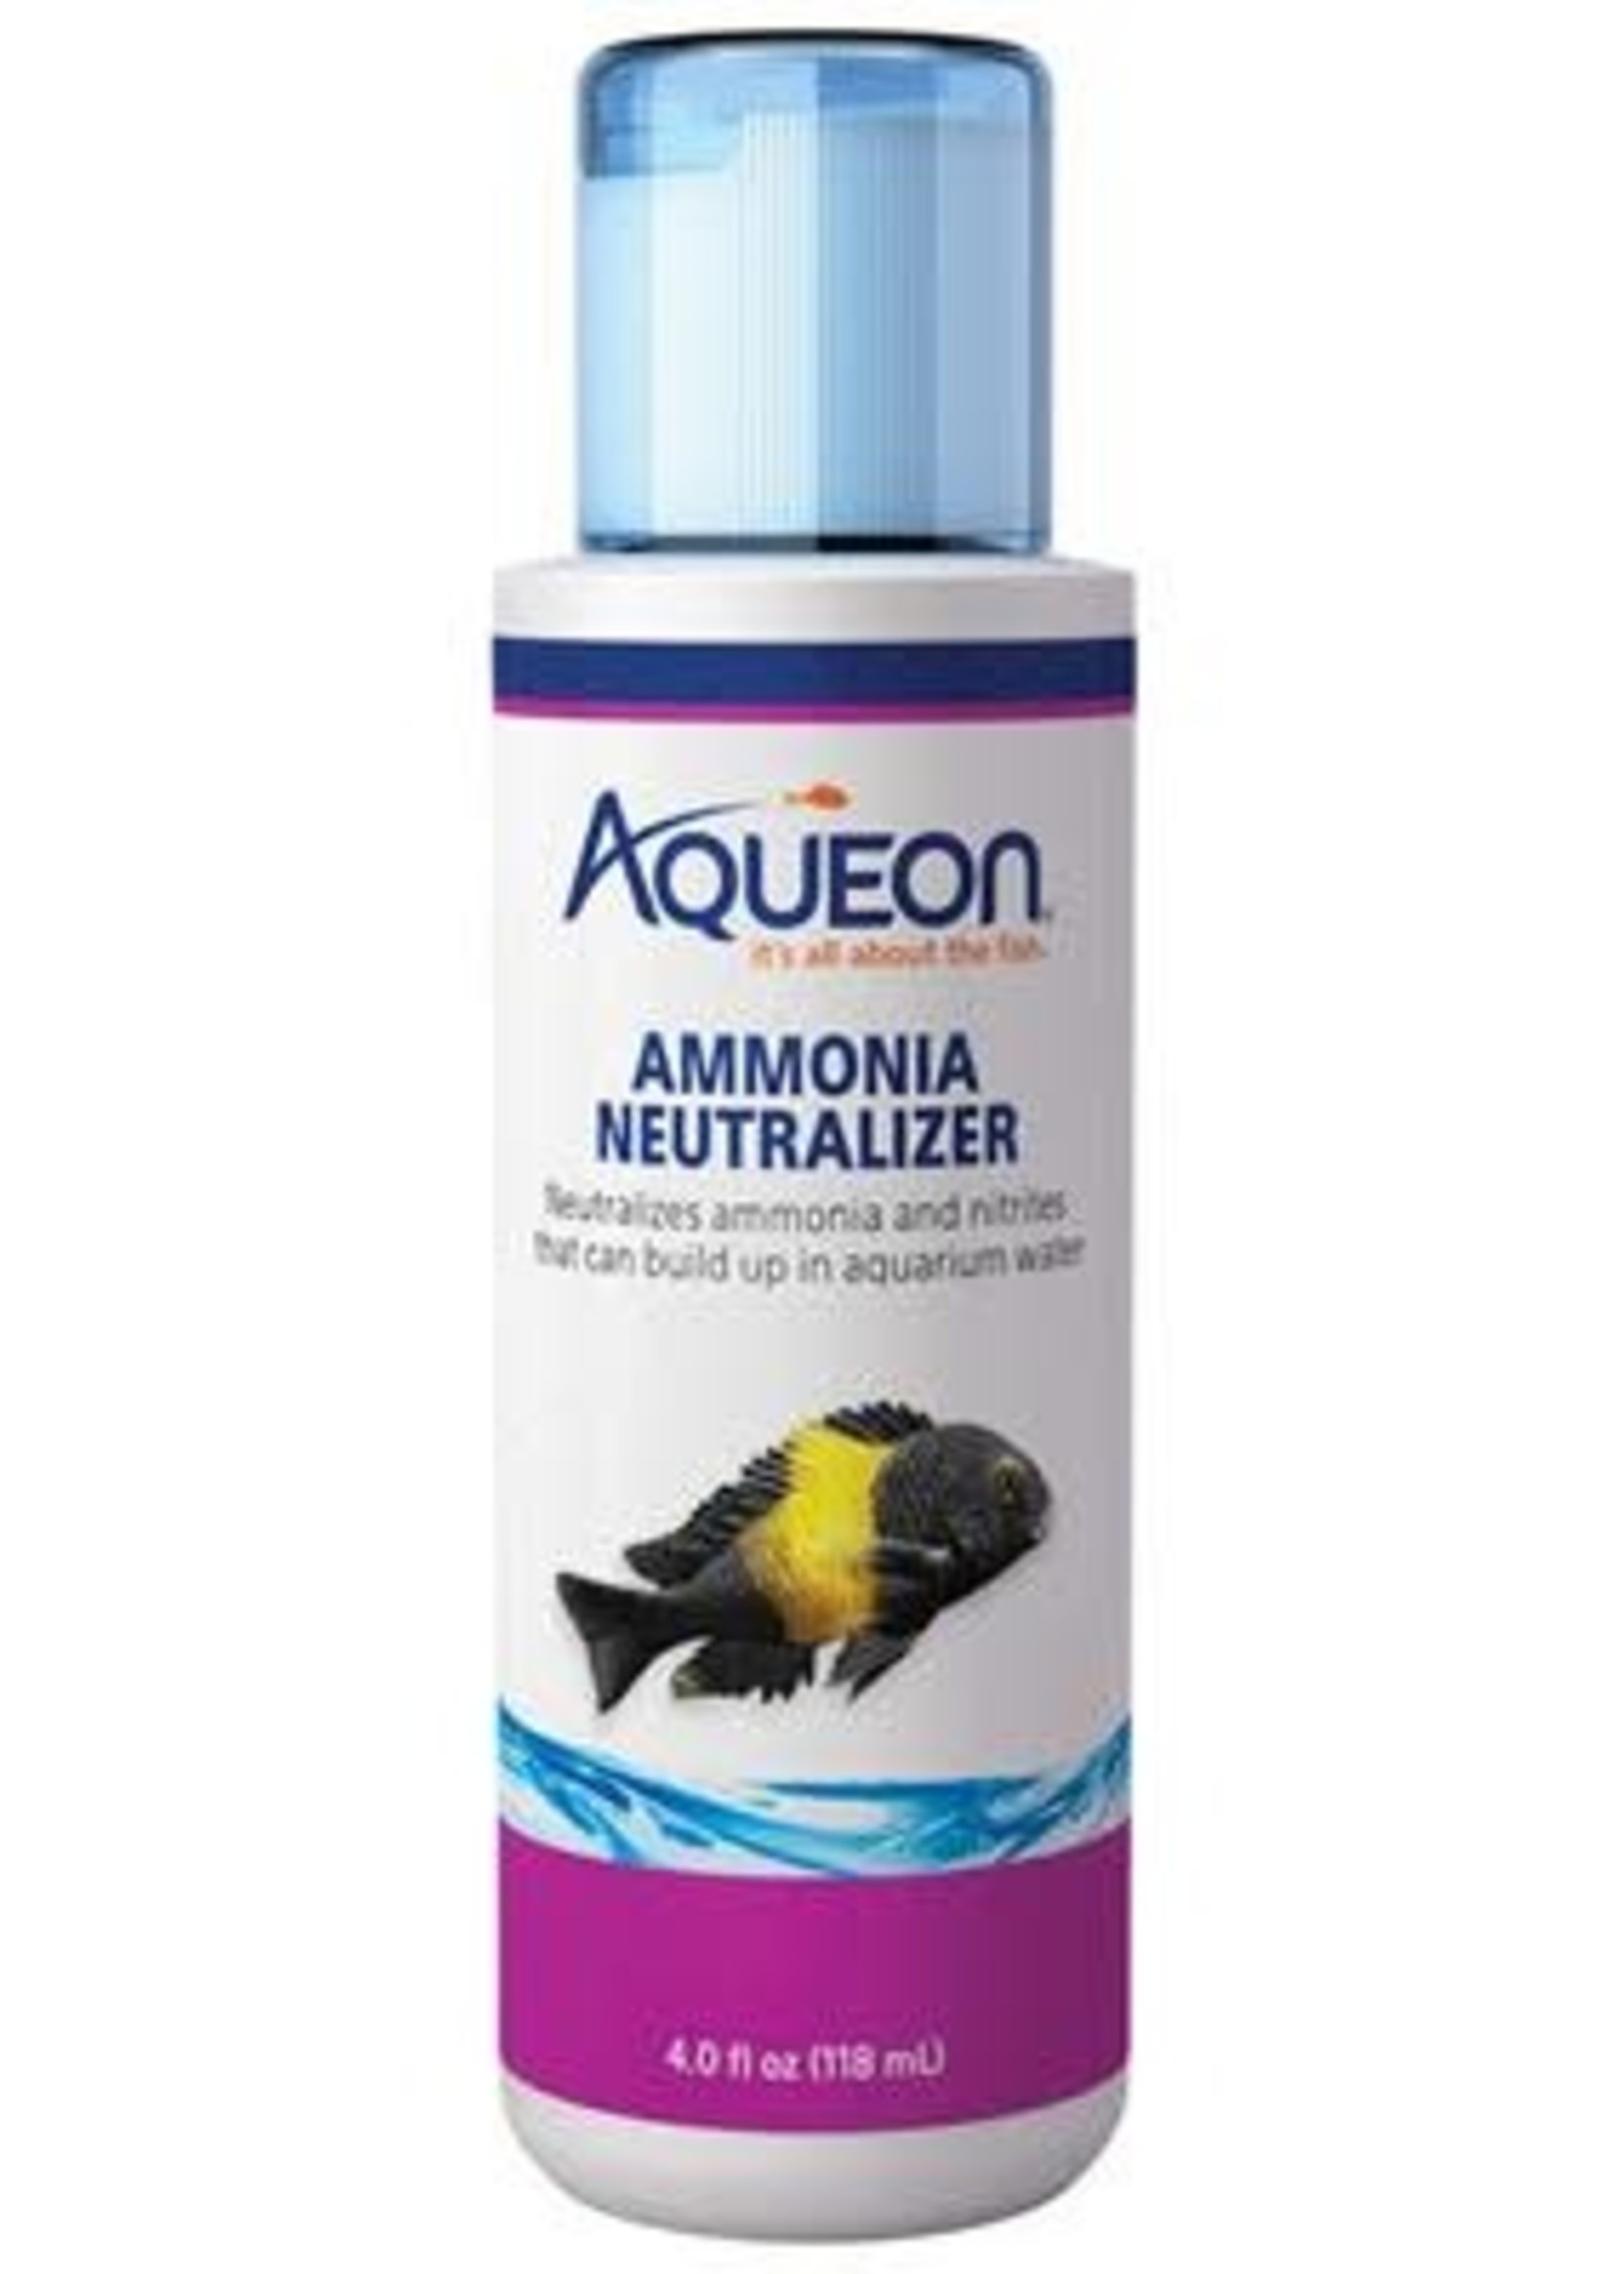 Aqueon Ammonia Neutralizer 4oz